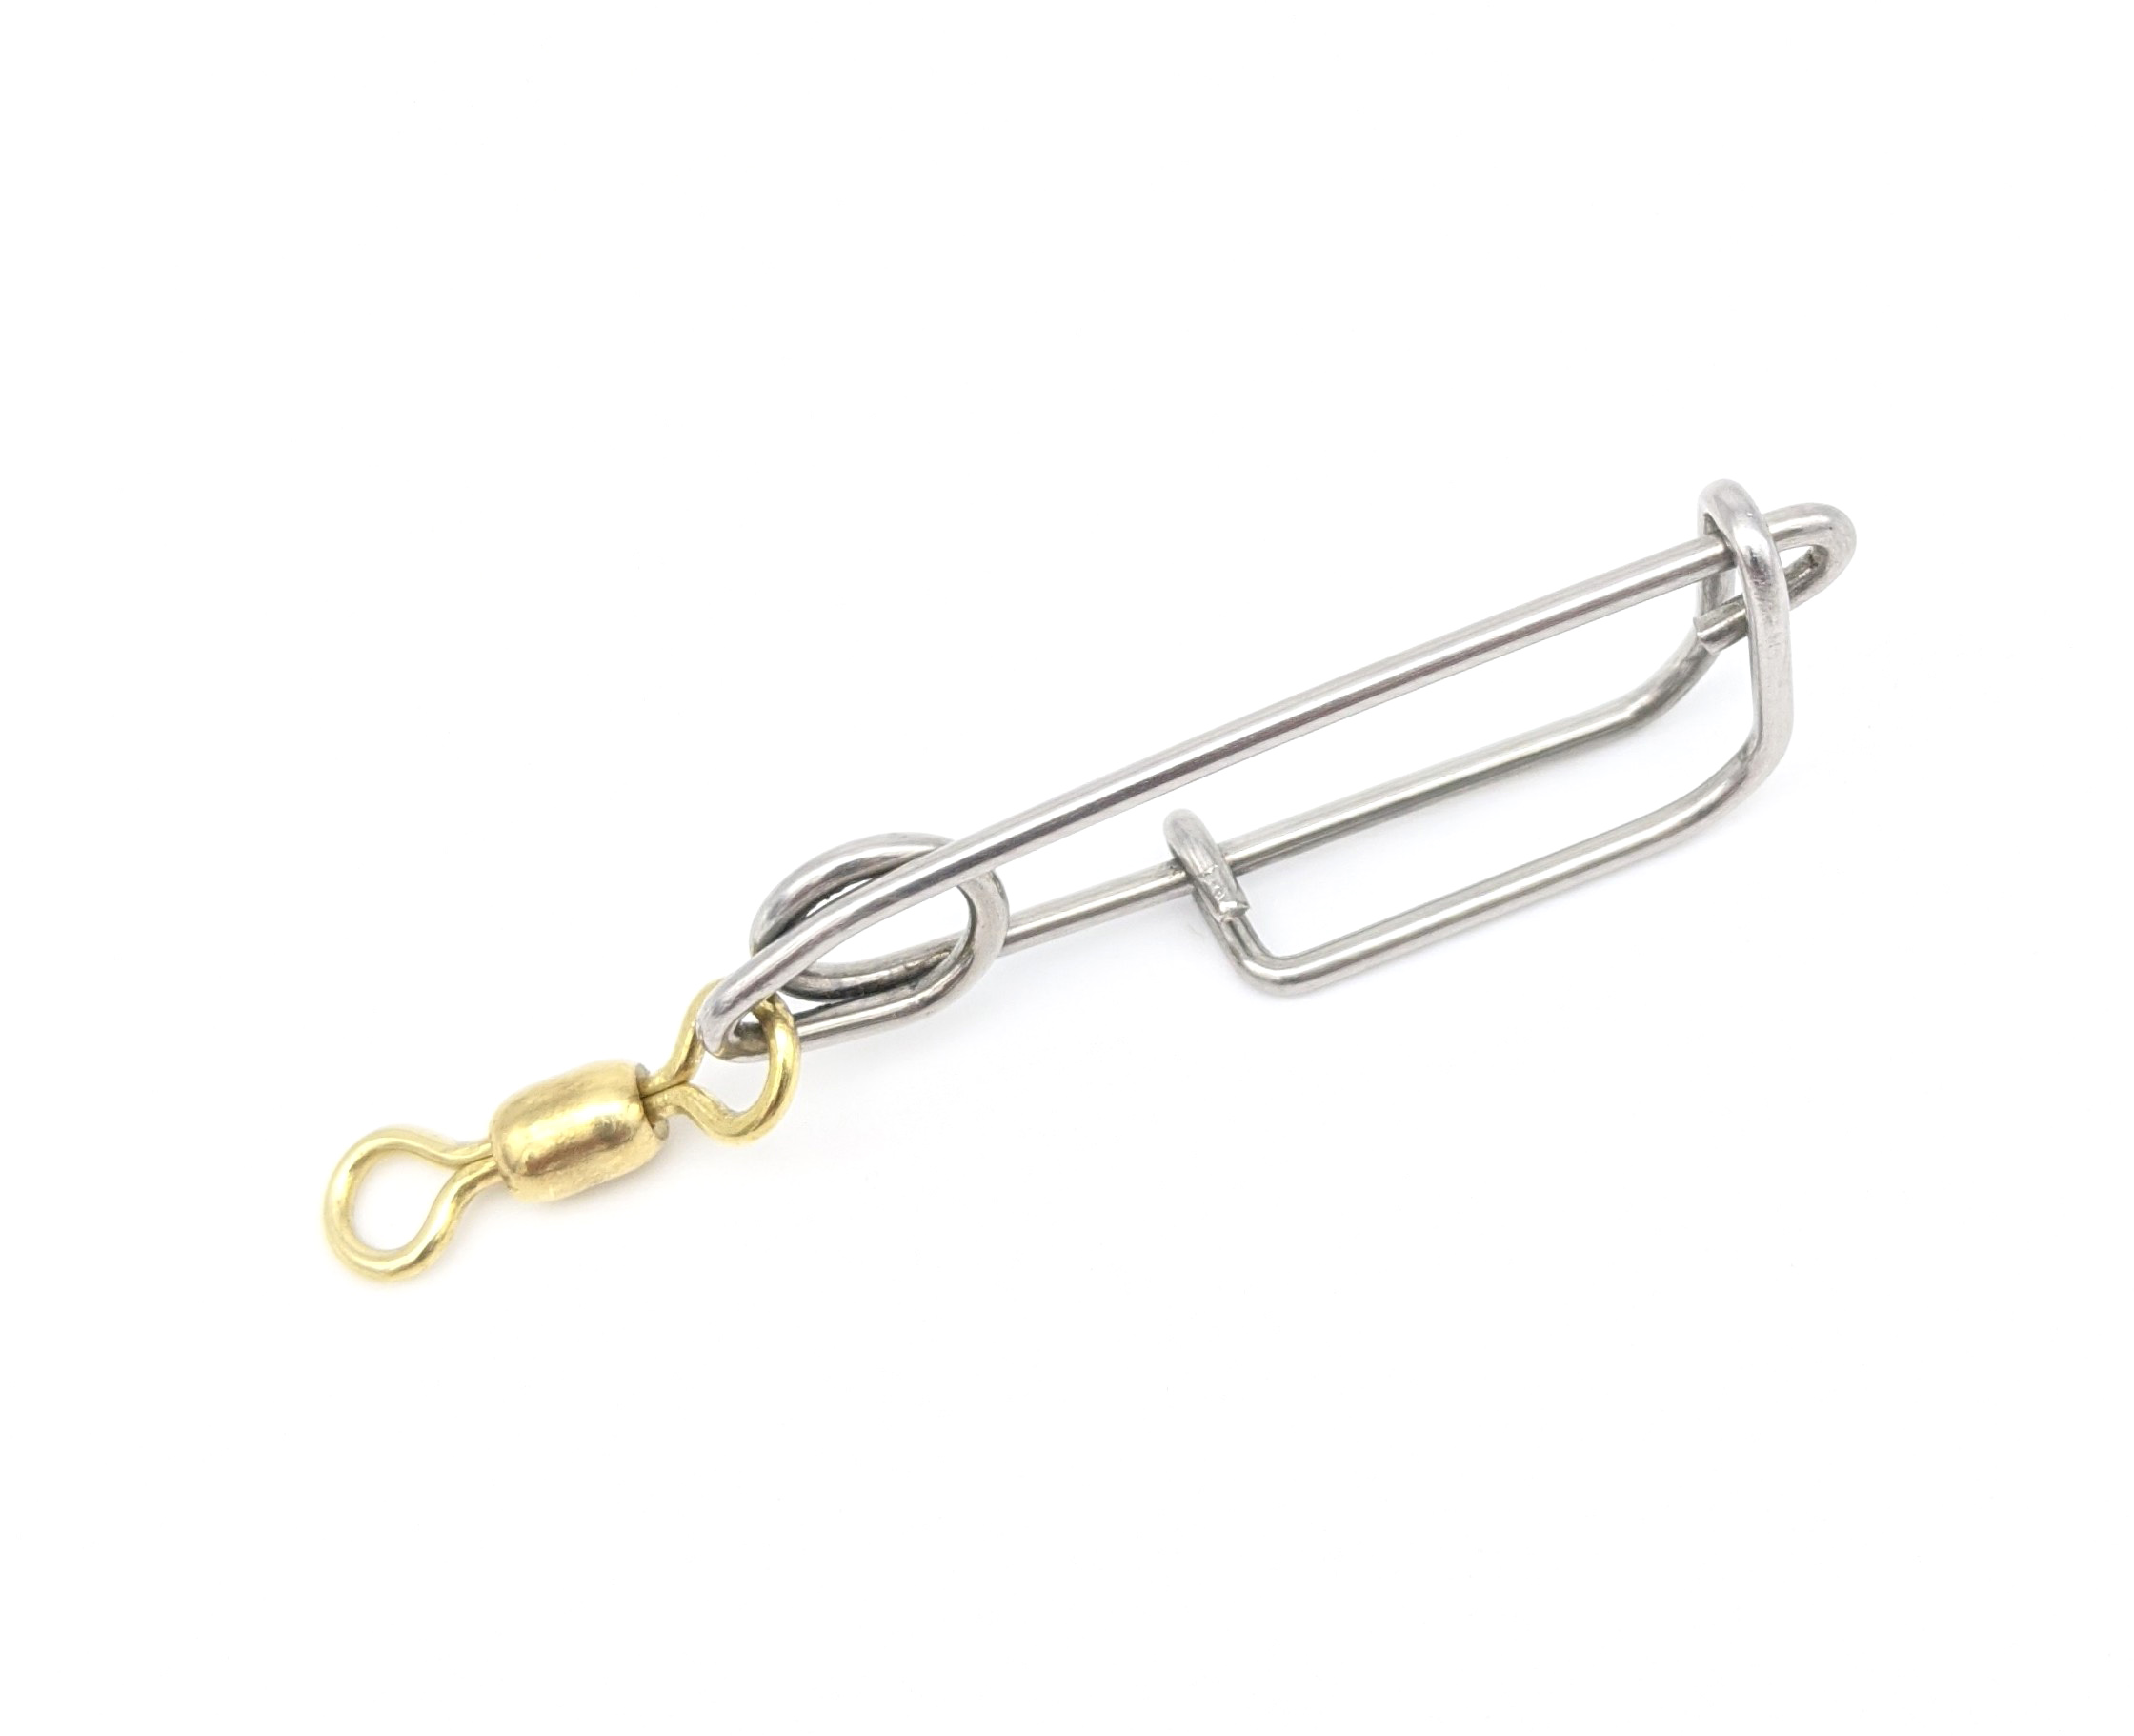 A trotline clip with a brass swivel hook